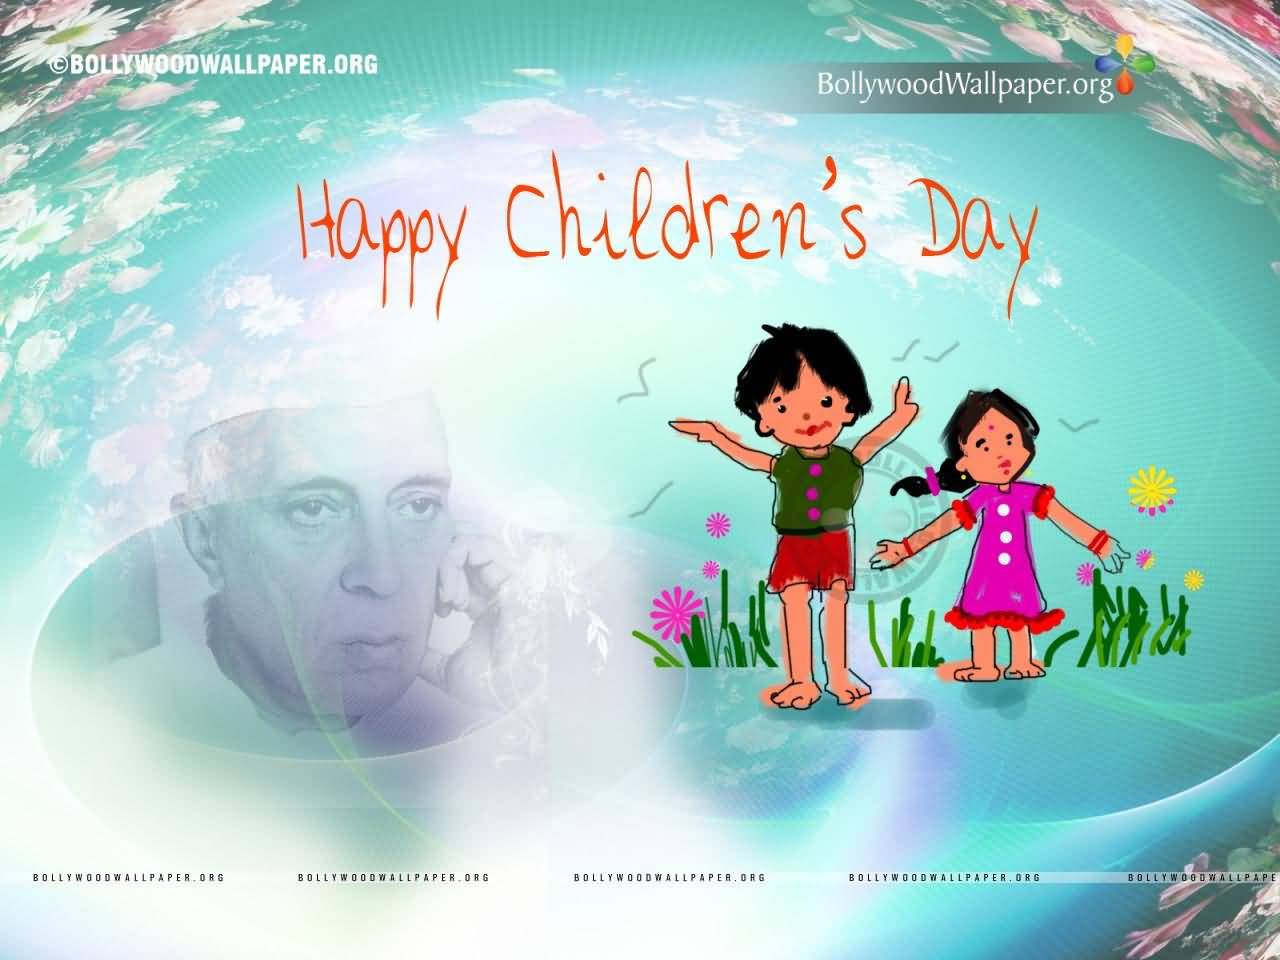 Happy Children's Day Indian Kids And Jawaharlal Nehru Wallpaper Image